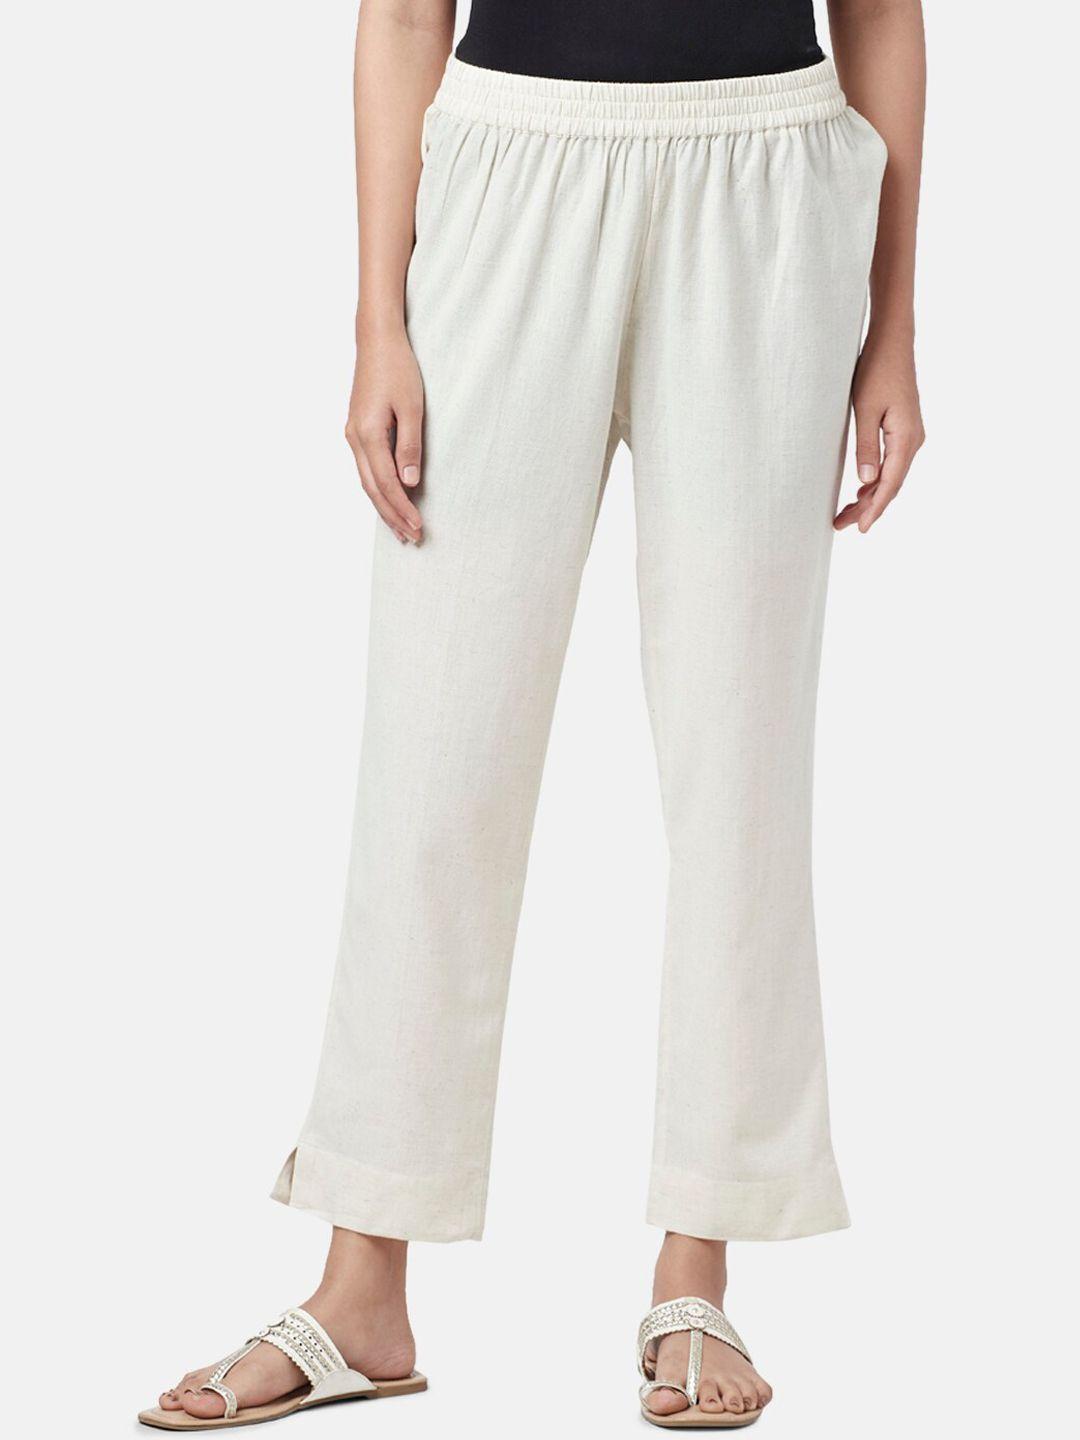 rangmanch by pantaloons women mid-rise cotton trousers